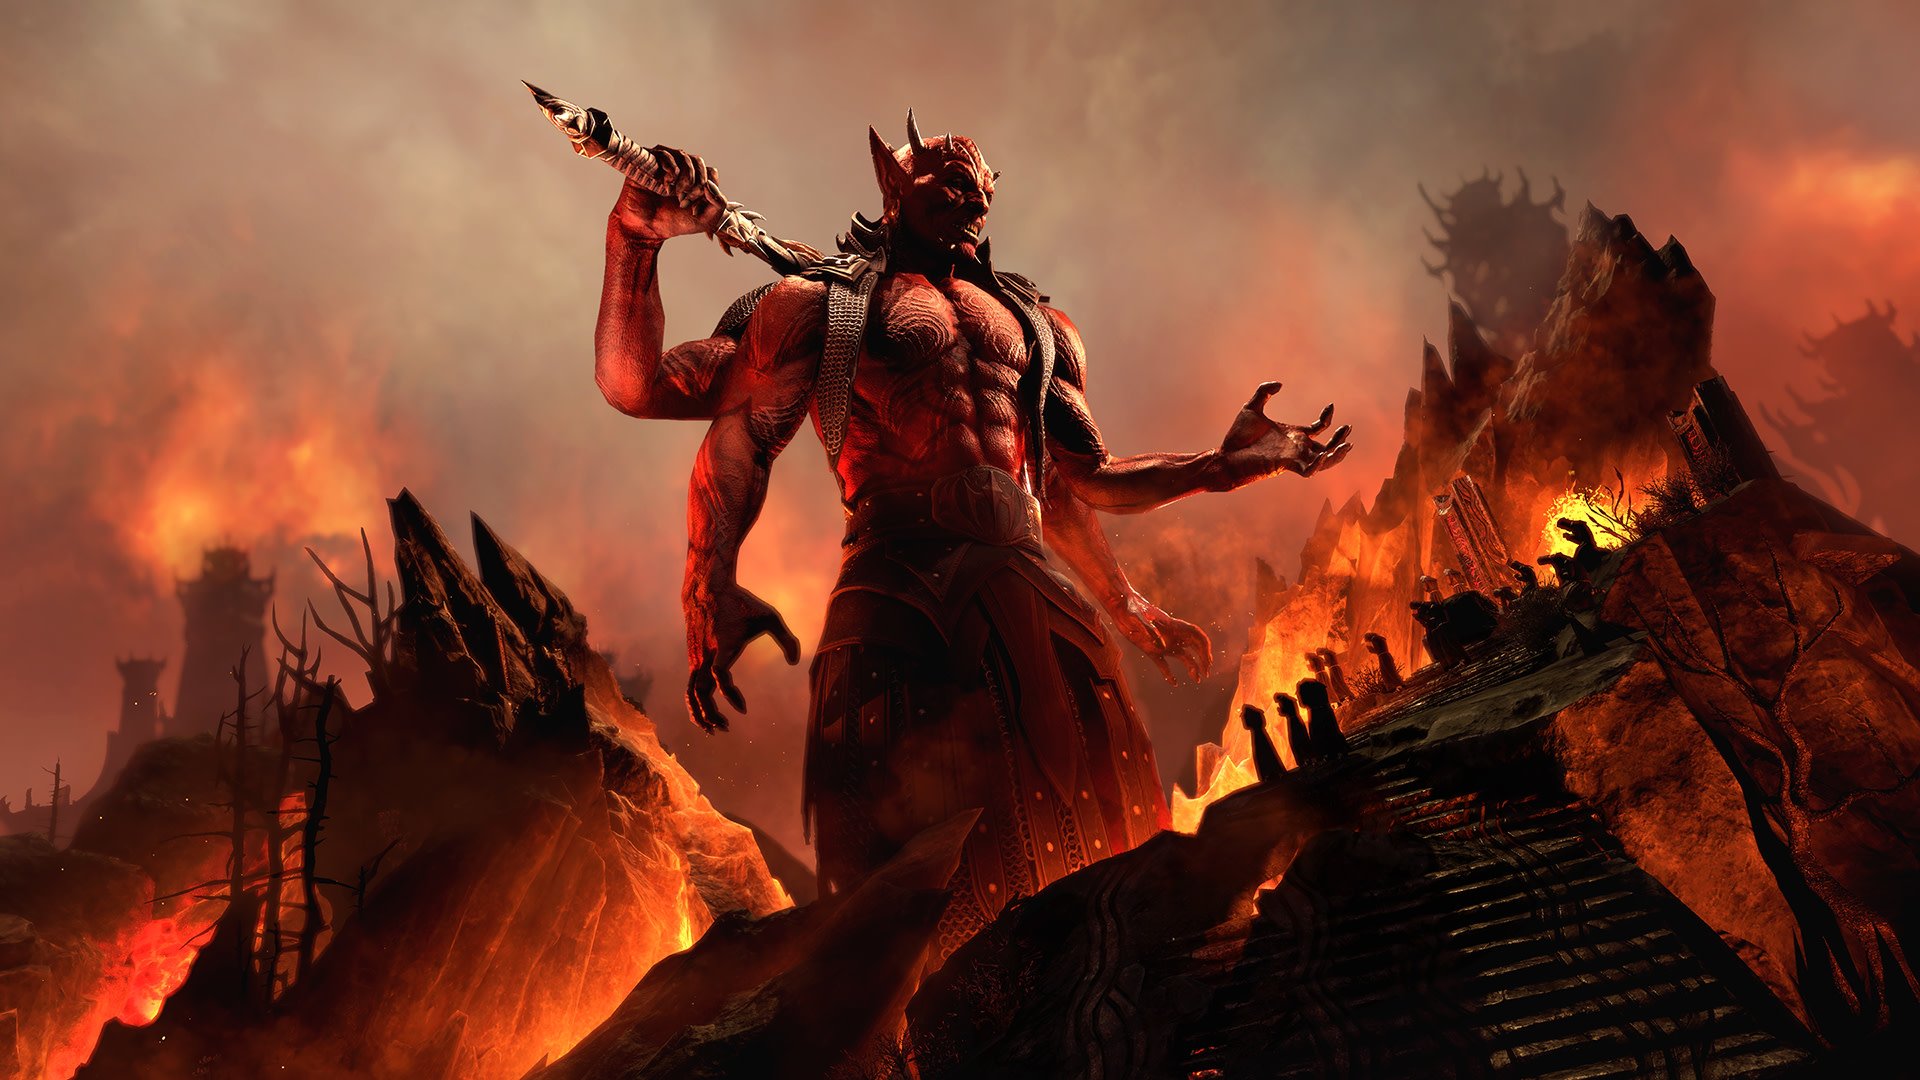 The Elder Scrolls Online: Blackwood Upgrade - Xbox Series X/Xbox One